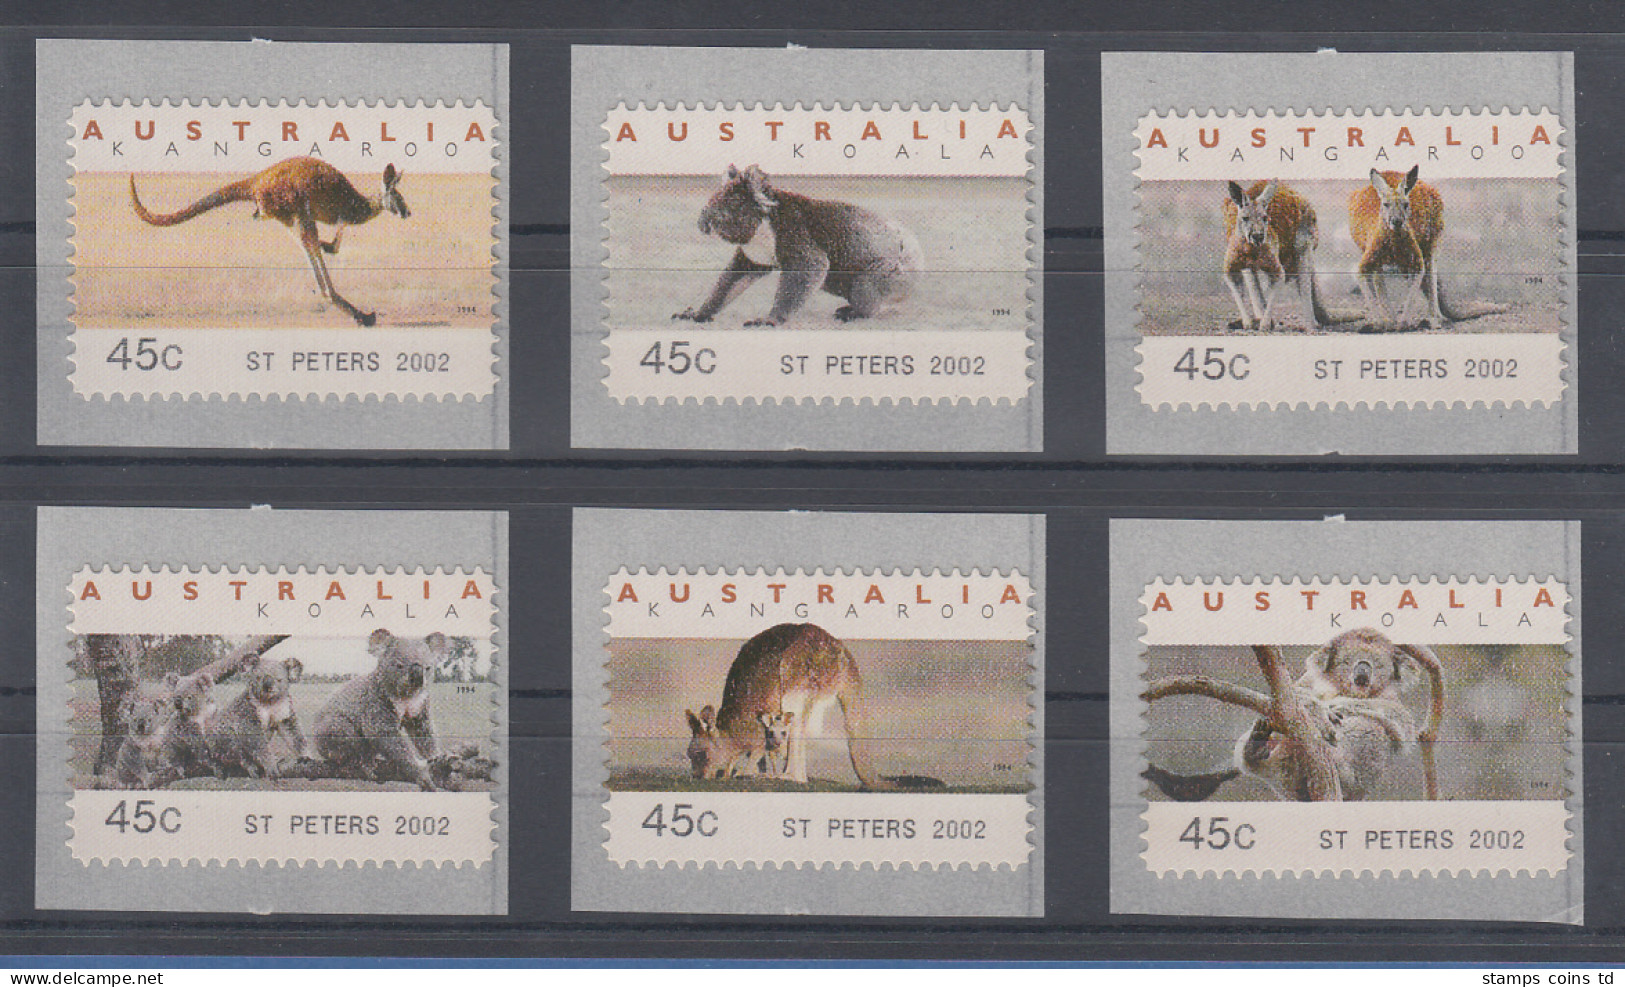 Australien Tritech-ATM Kangaroo / Koala 6 Motive Kpl. ST. PETERS 2002 - Machine Labels [ATM]